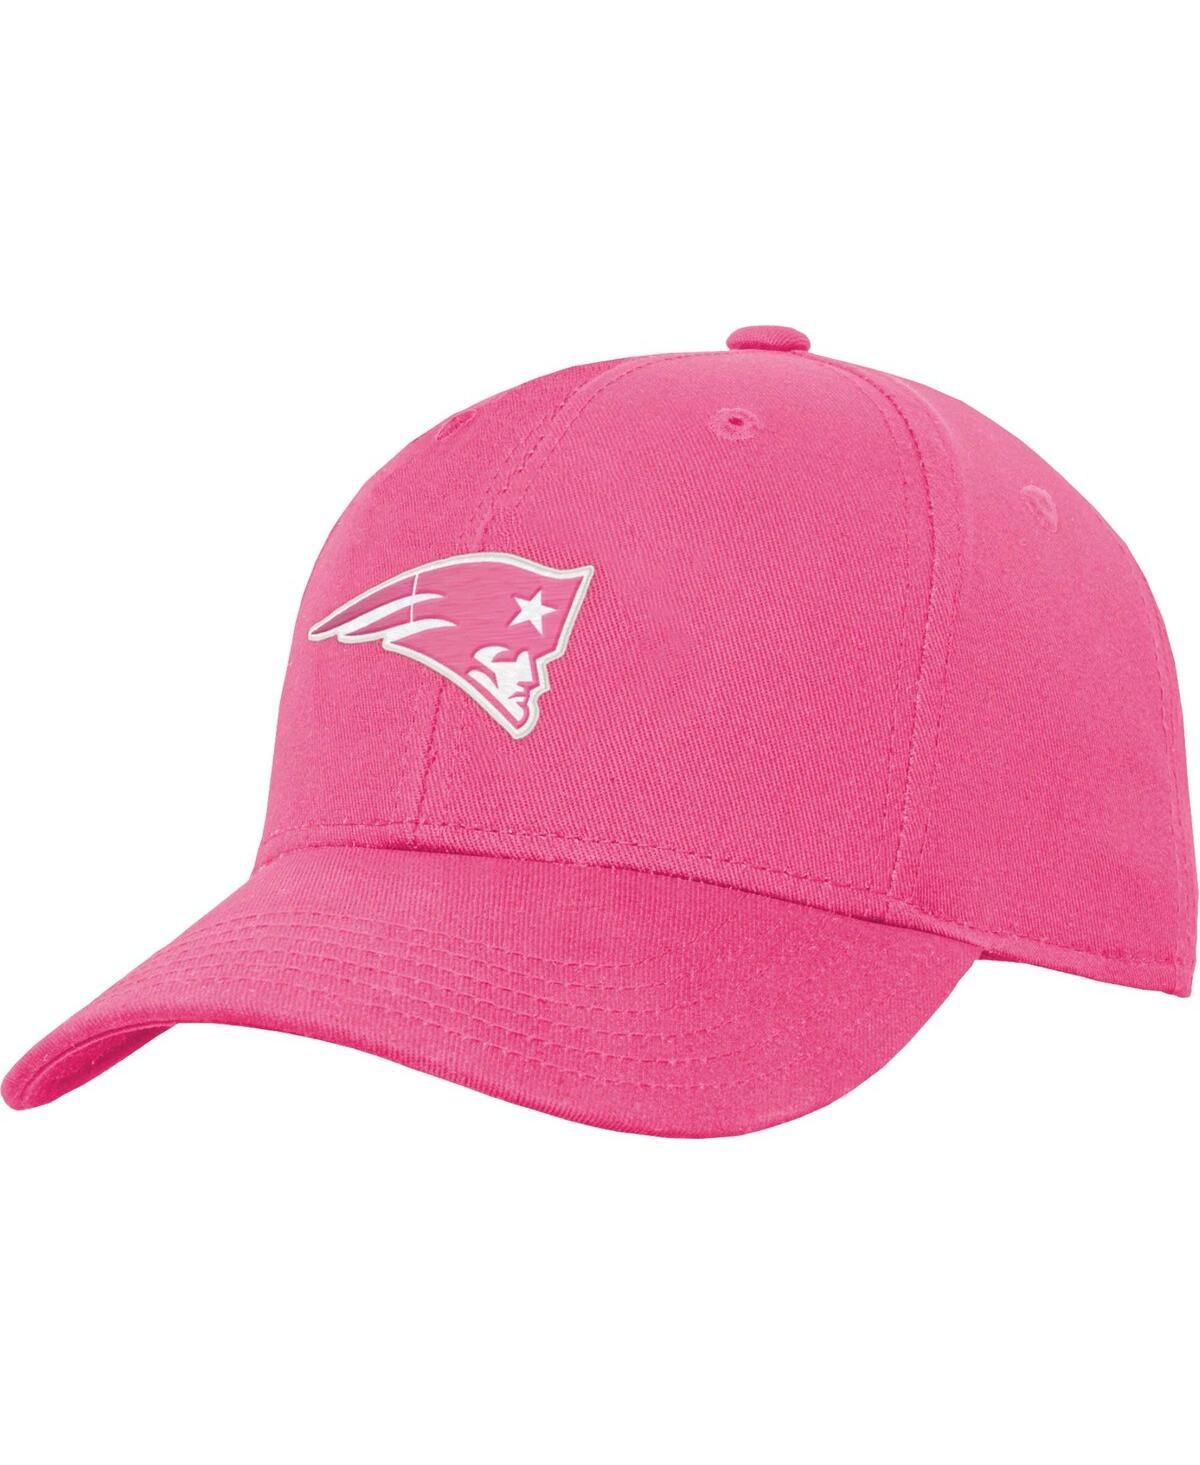 Outerstuff Kids' Big Girls Pink New England Patriots Adjustable Hat